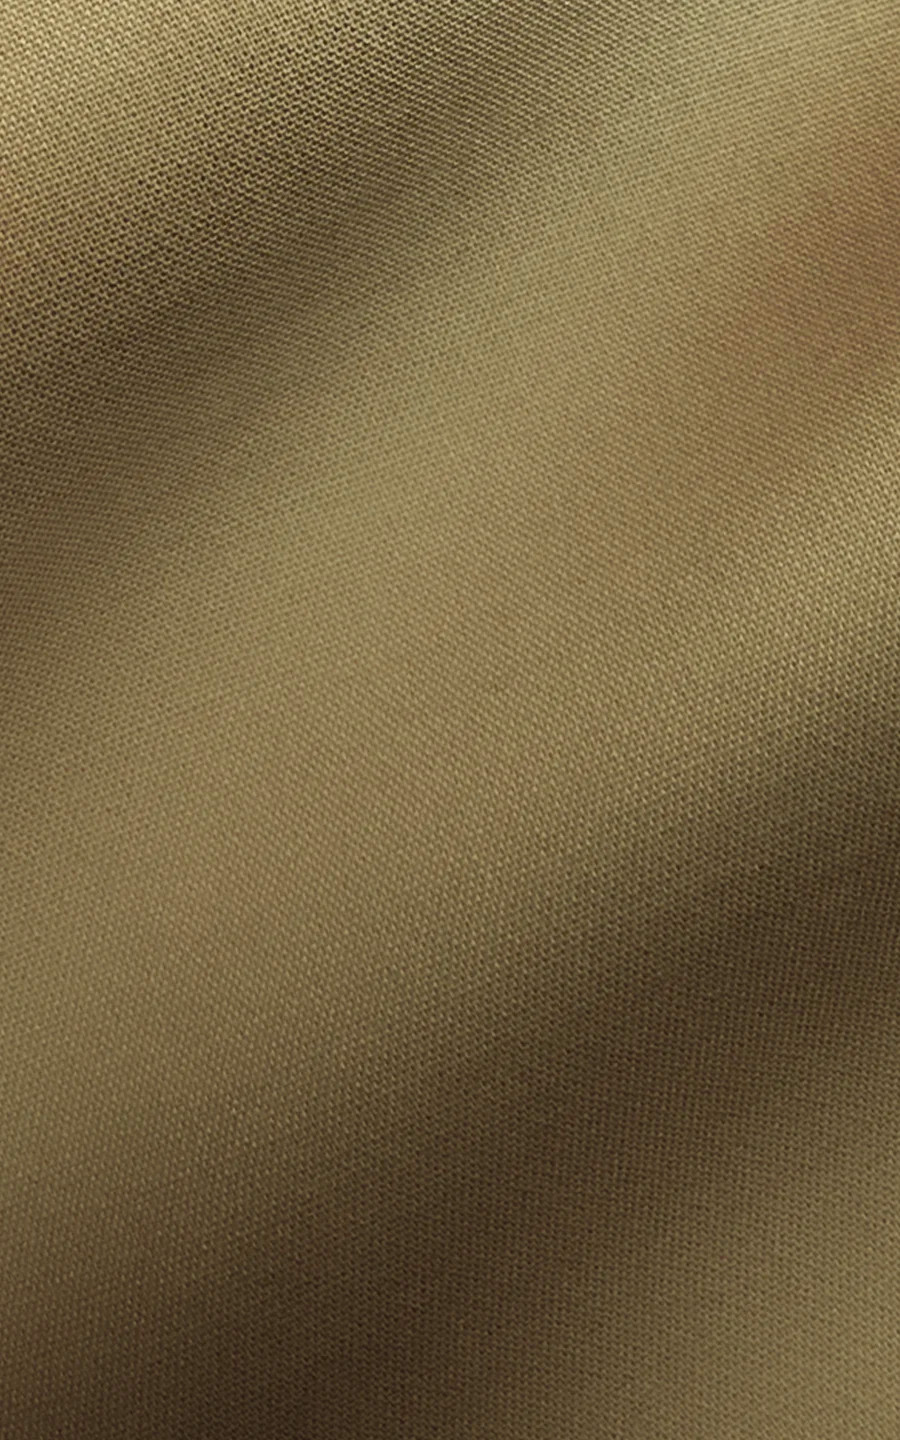 Khaki cotton fabric 59. Sold by 2 yard (CT24)